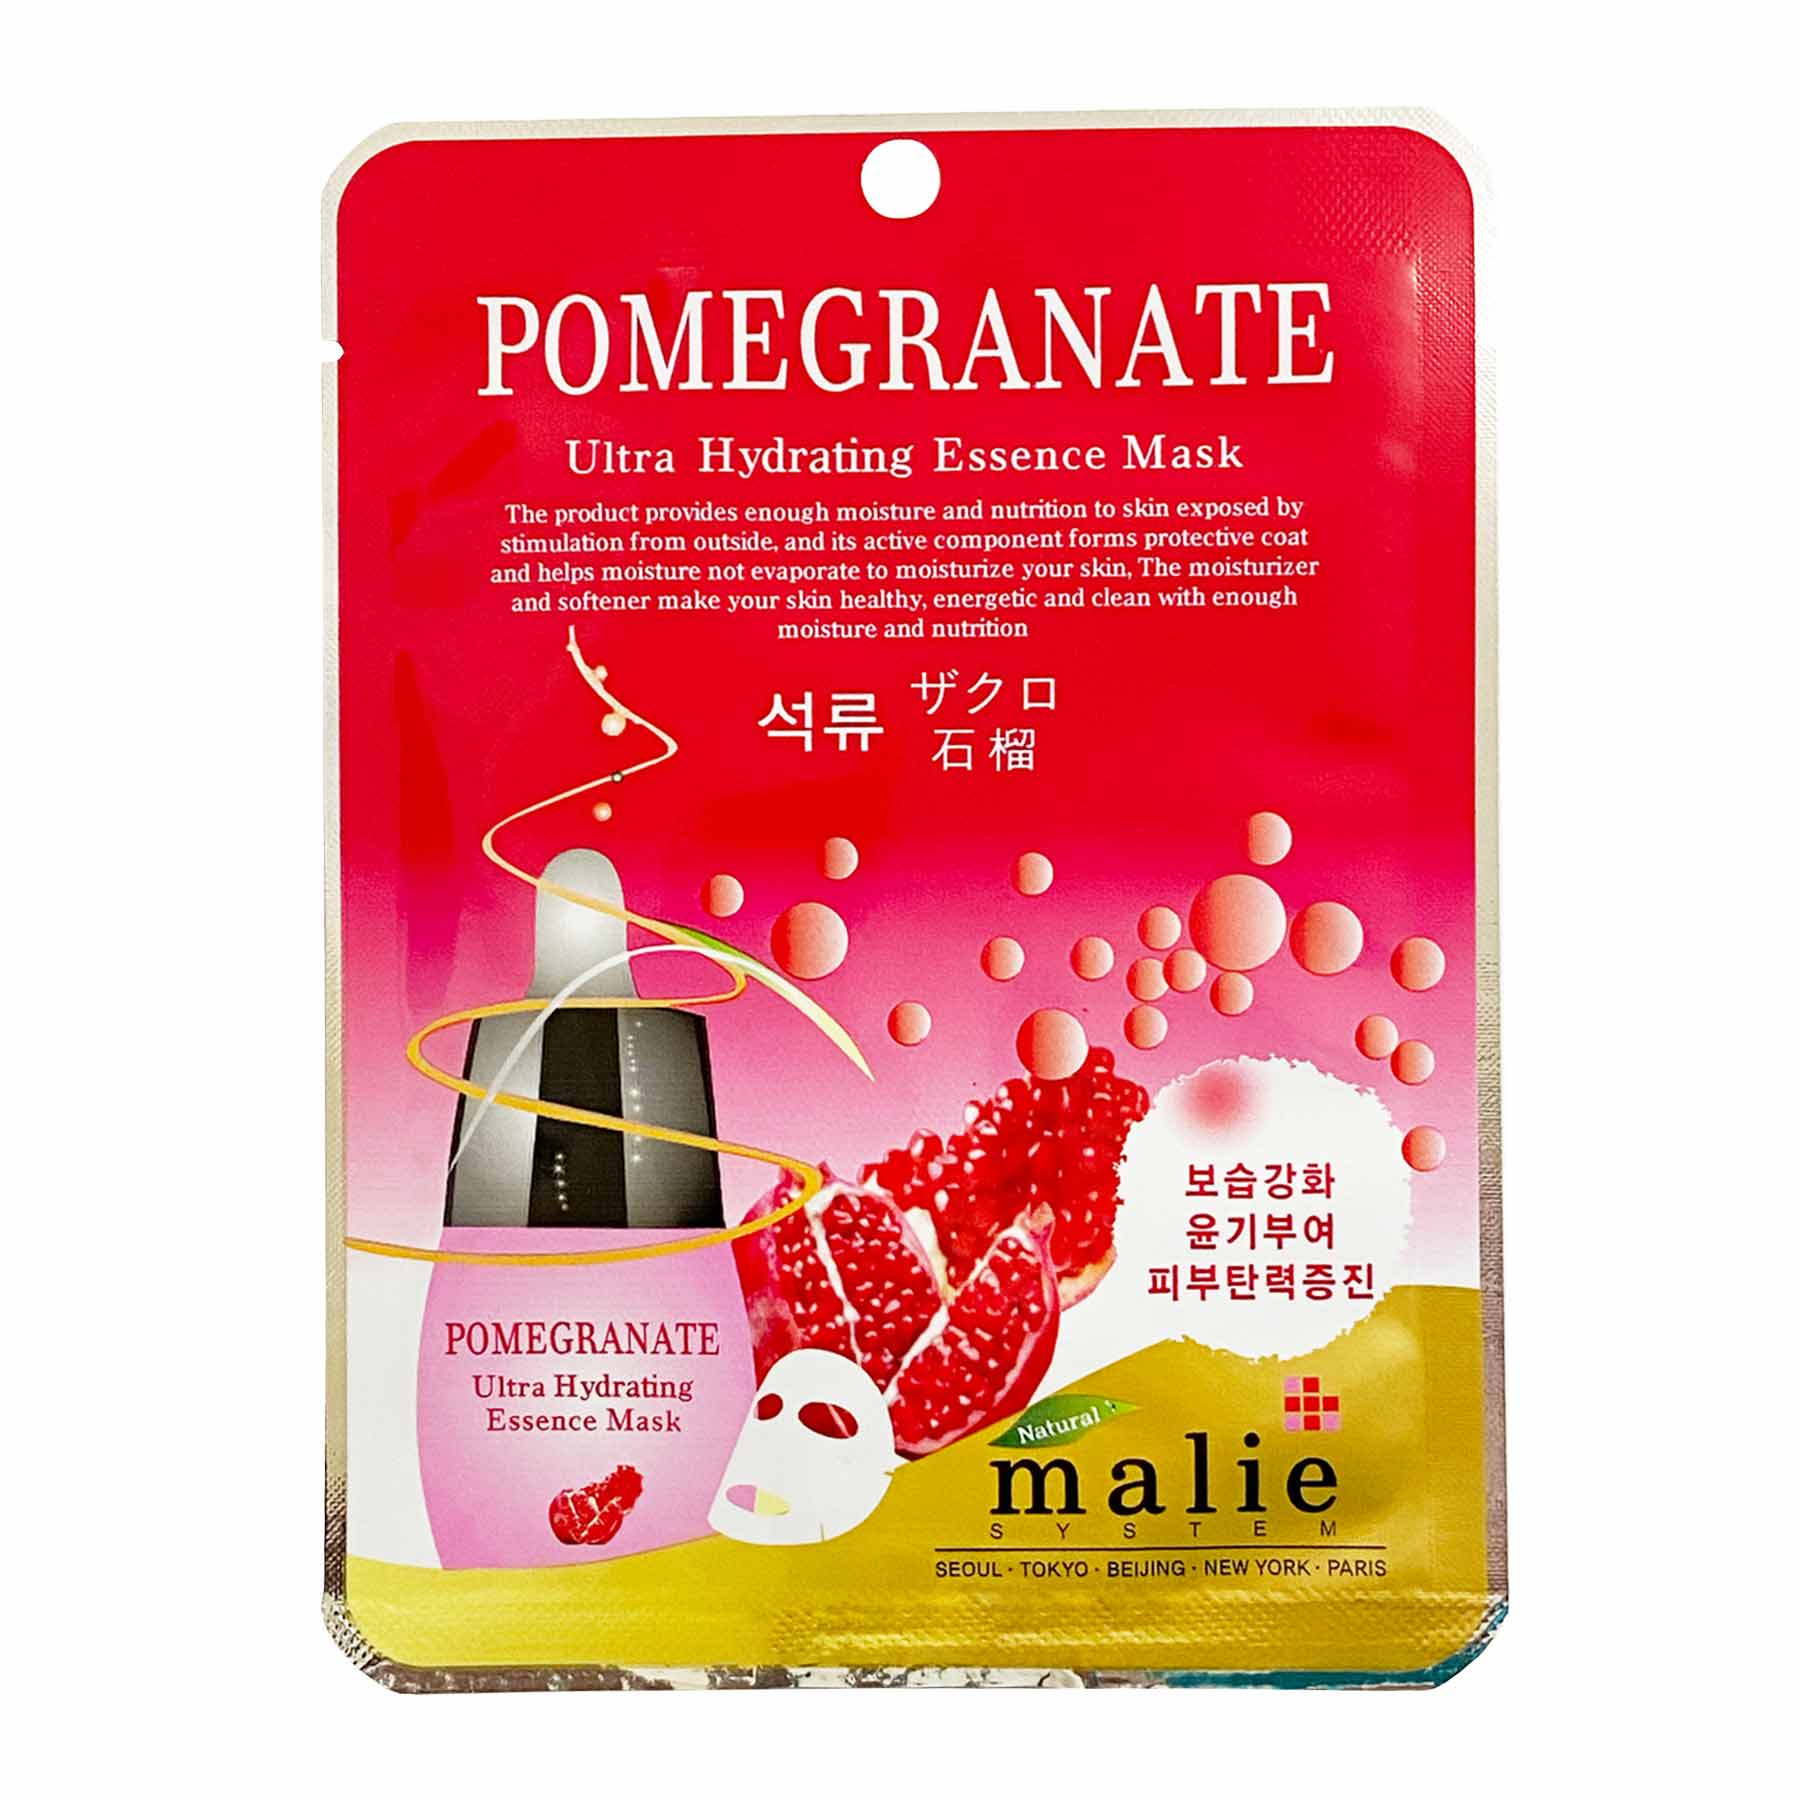 Pomegranate Ultra Hydrating Essence Mask